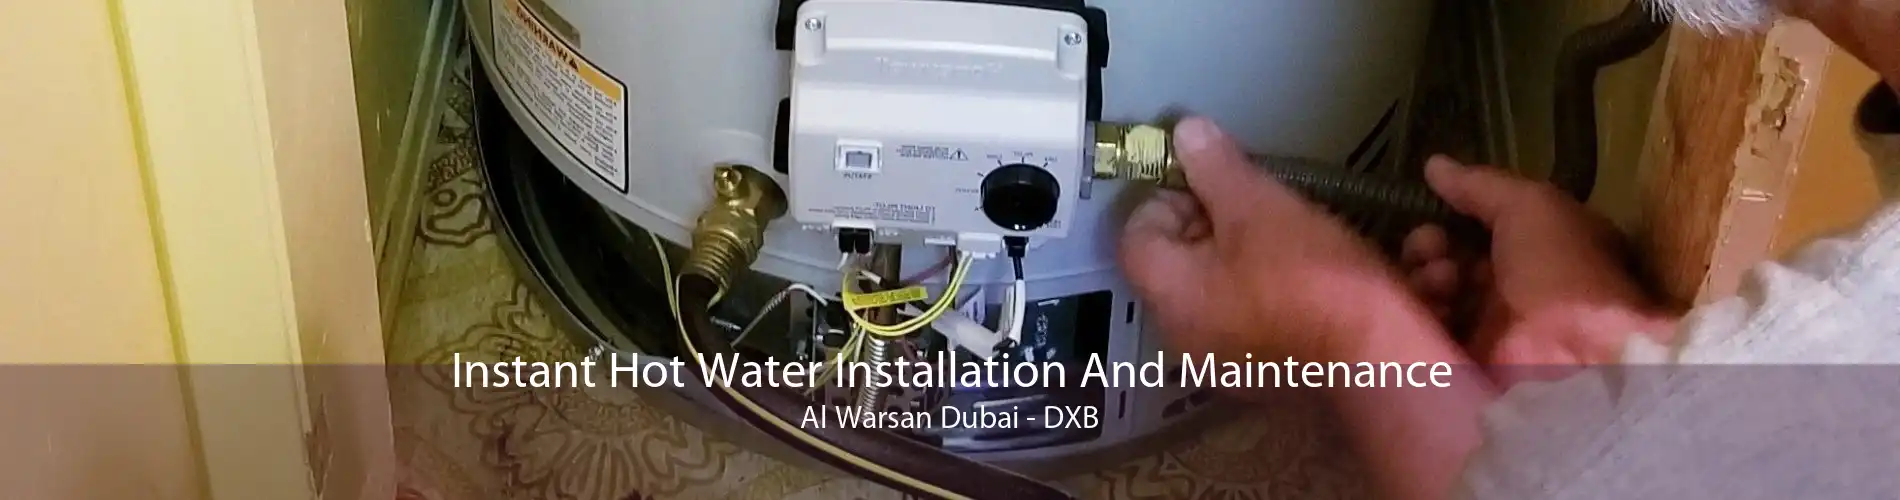 Instant Hot Water Installation And Maintenance Al Warsan Dubai - DXB